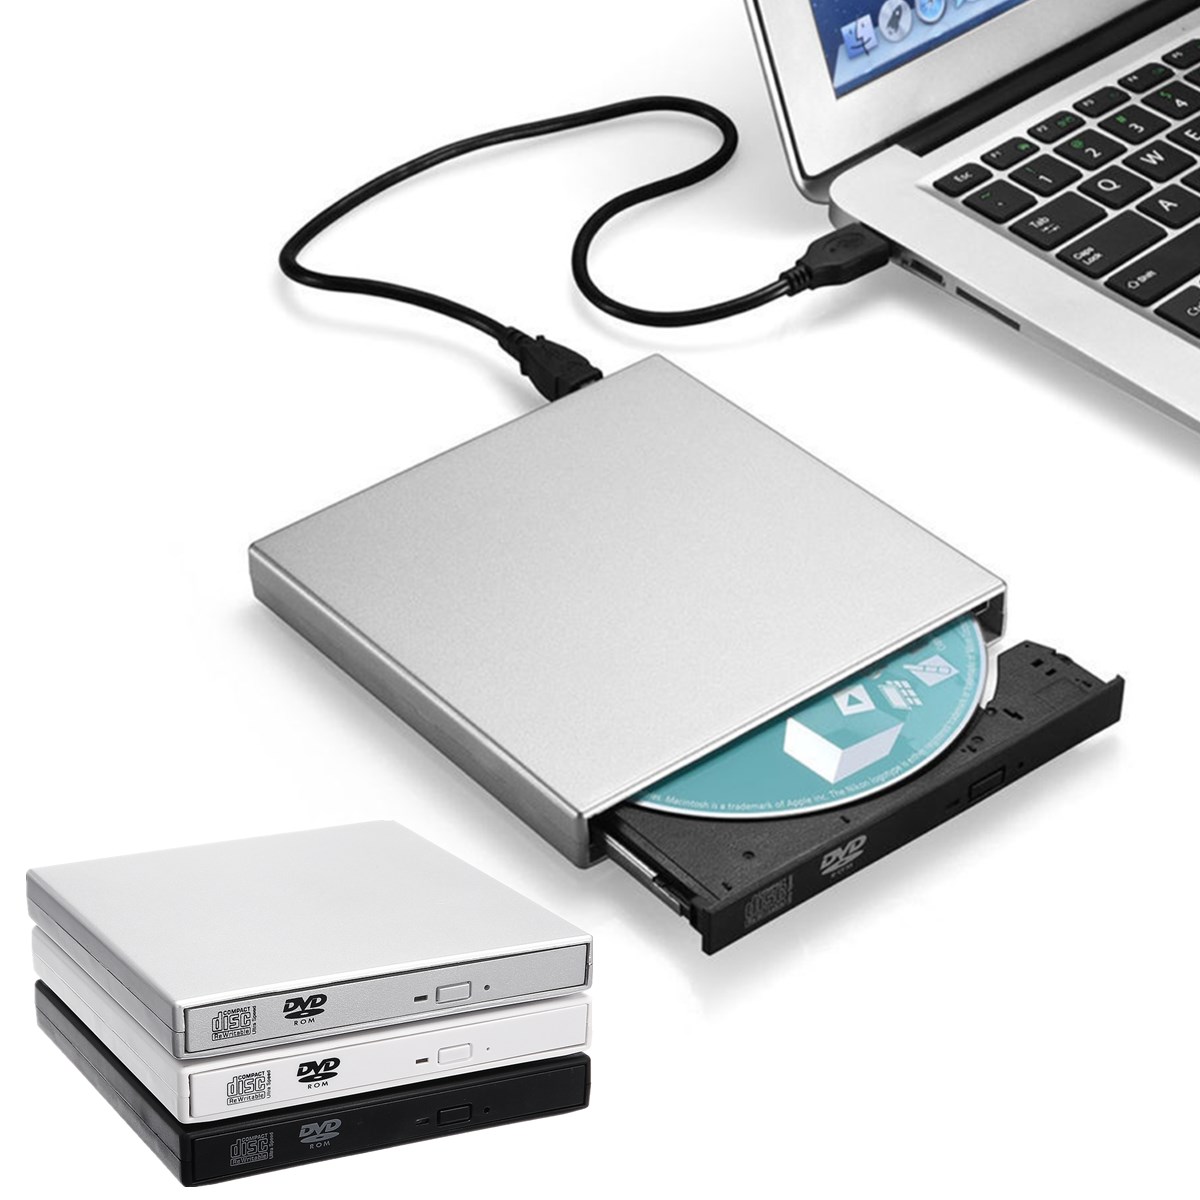 External-DVD-Optical-Drive-Combo-USB-20-CD-Burner-CDDVD-ROM-CD-RW-Player-Slim-Portable-Reader-Record-1968614-5